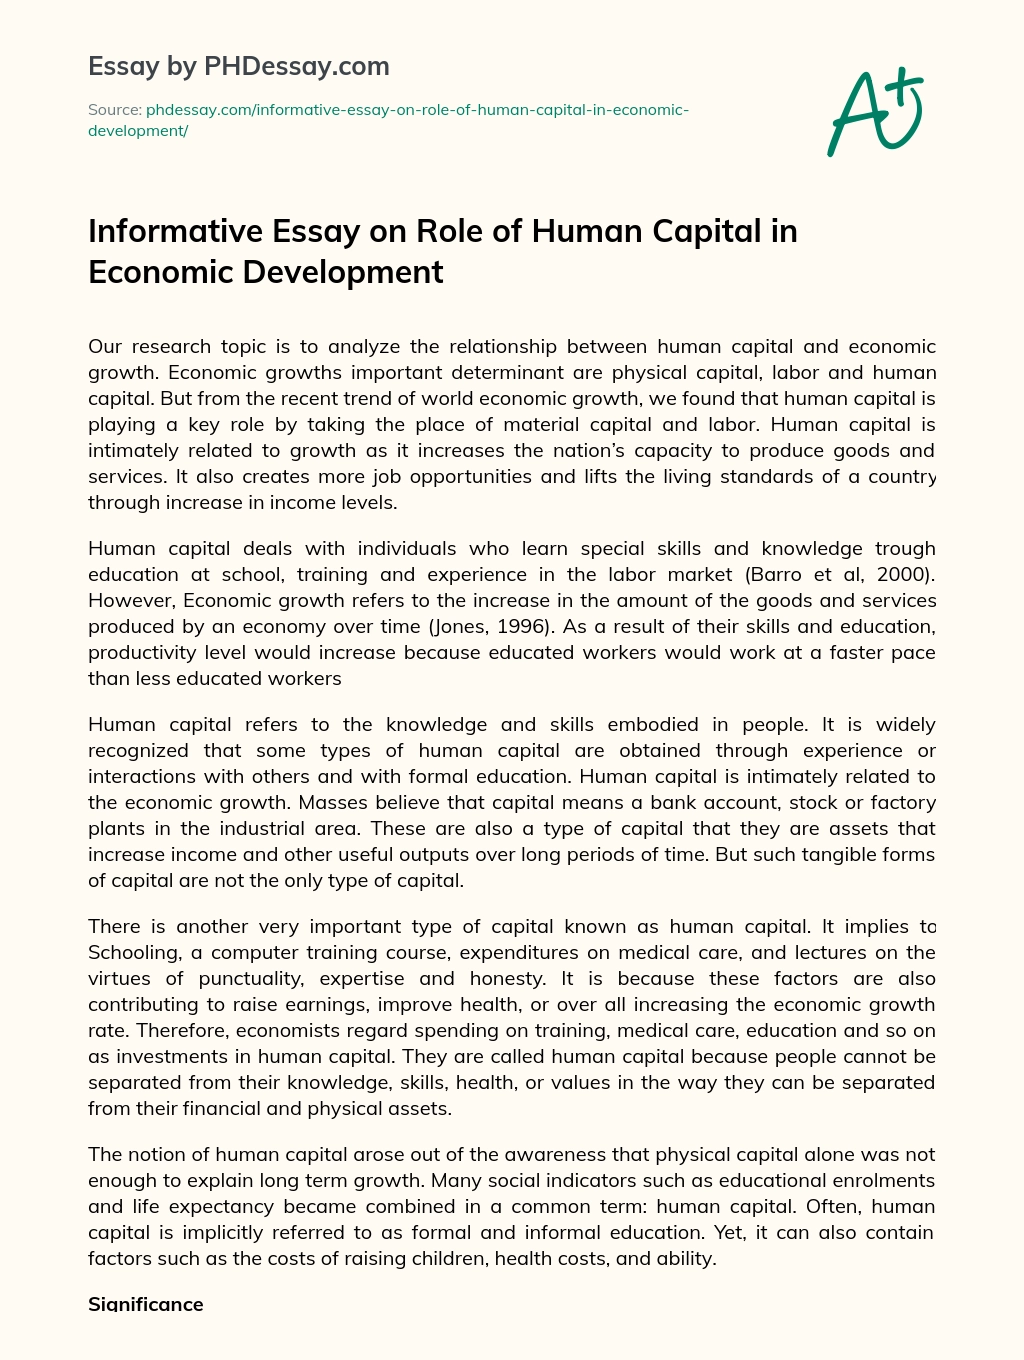 essay titles for human capital